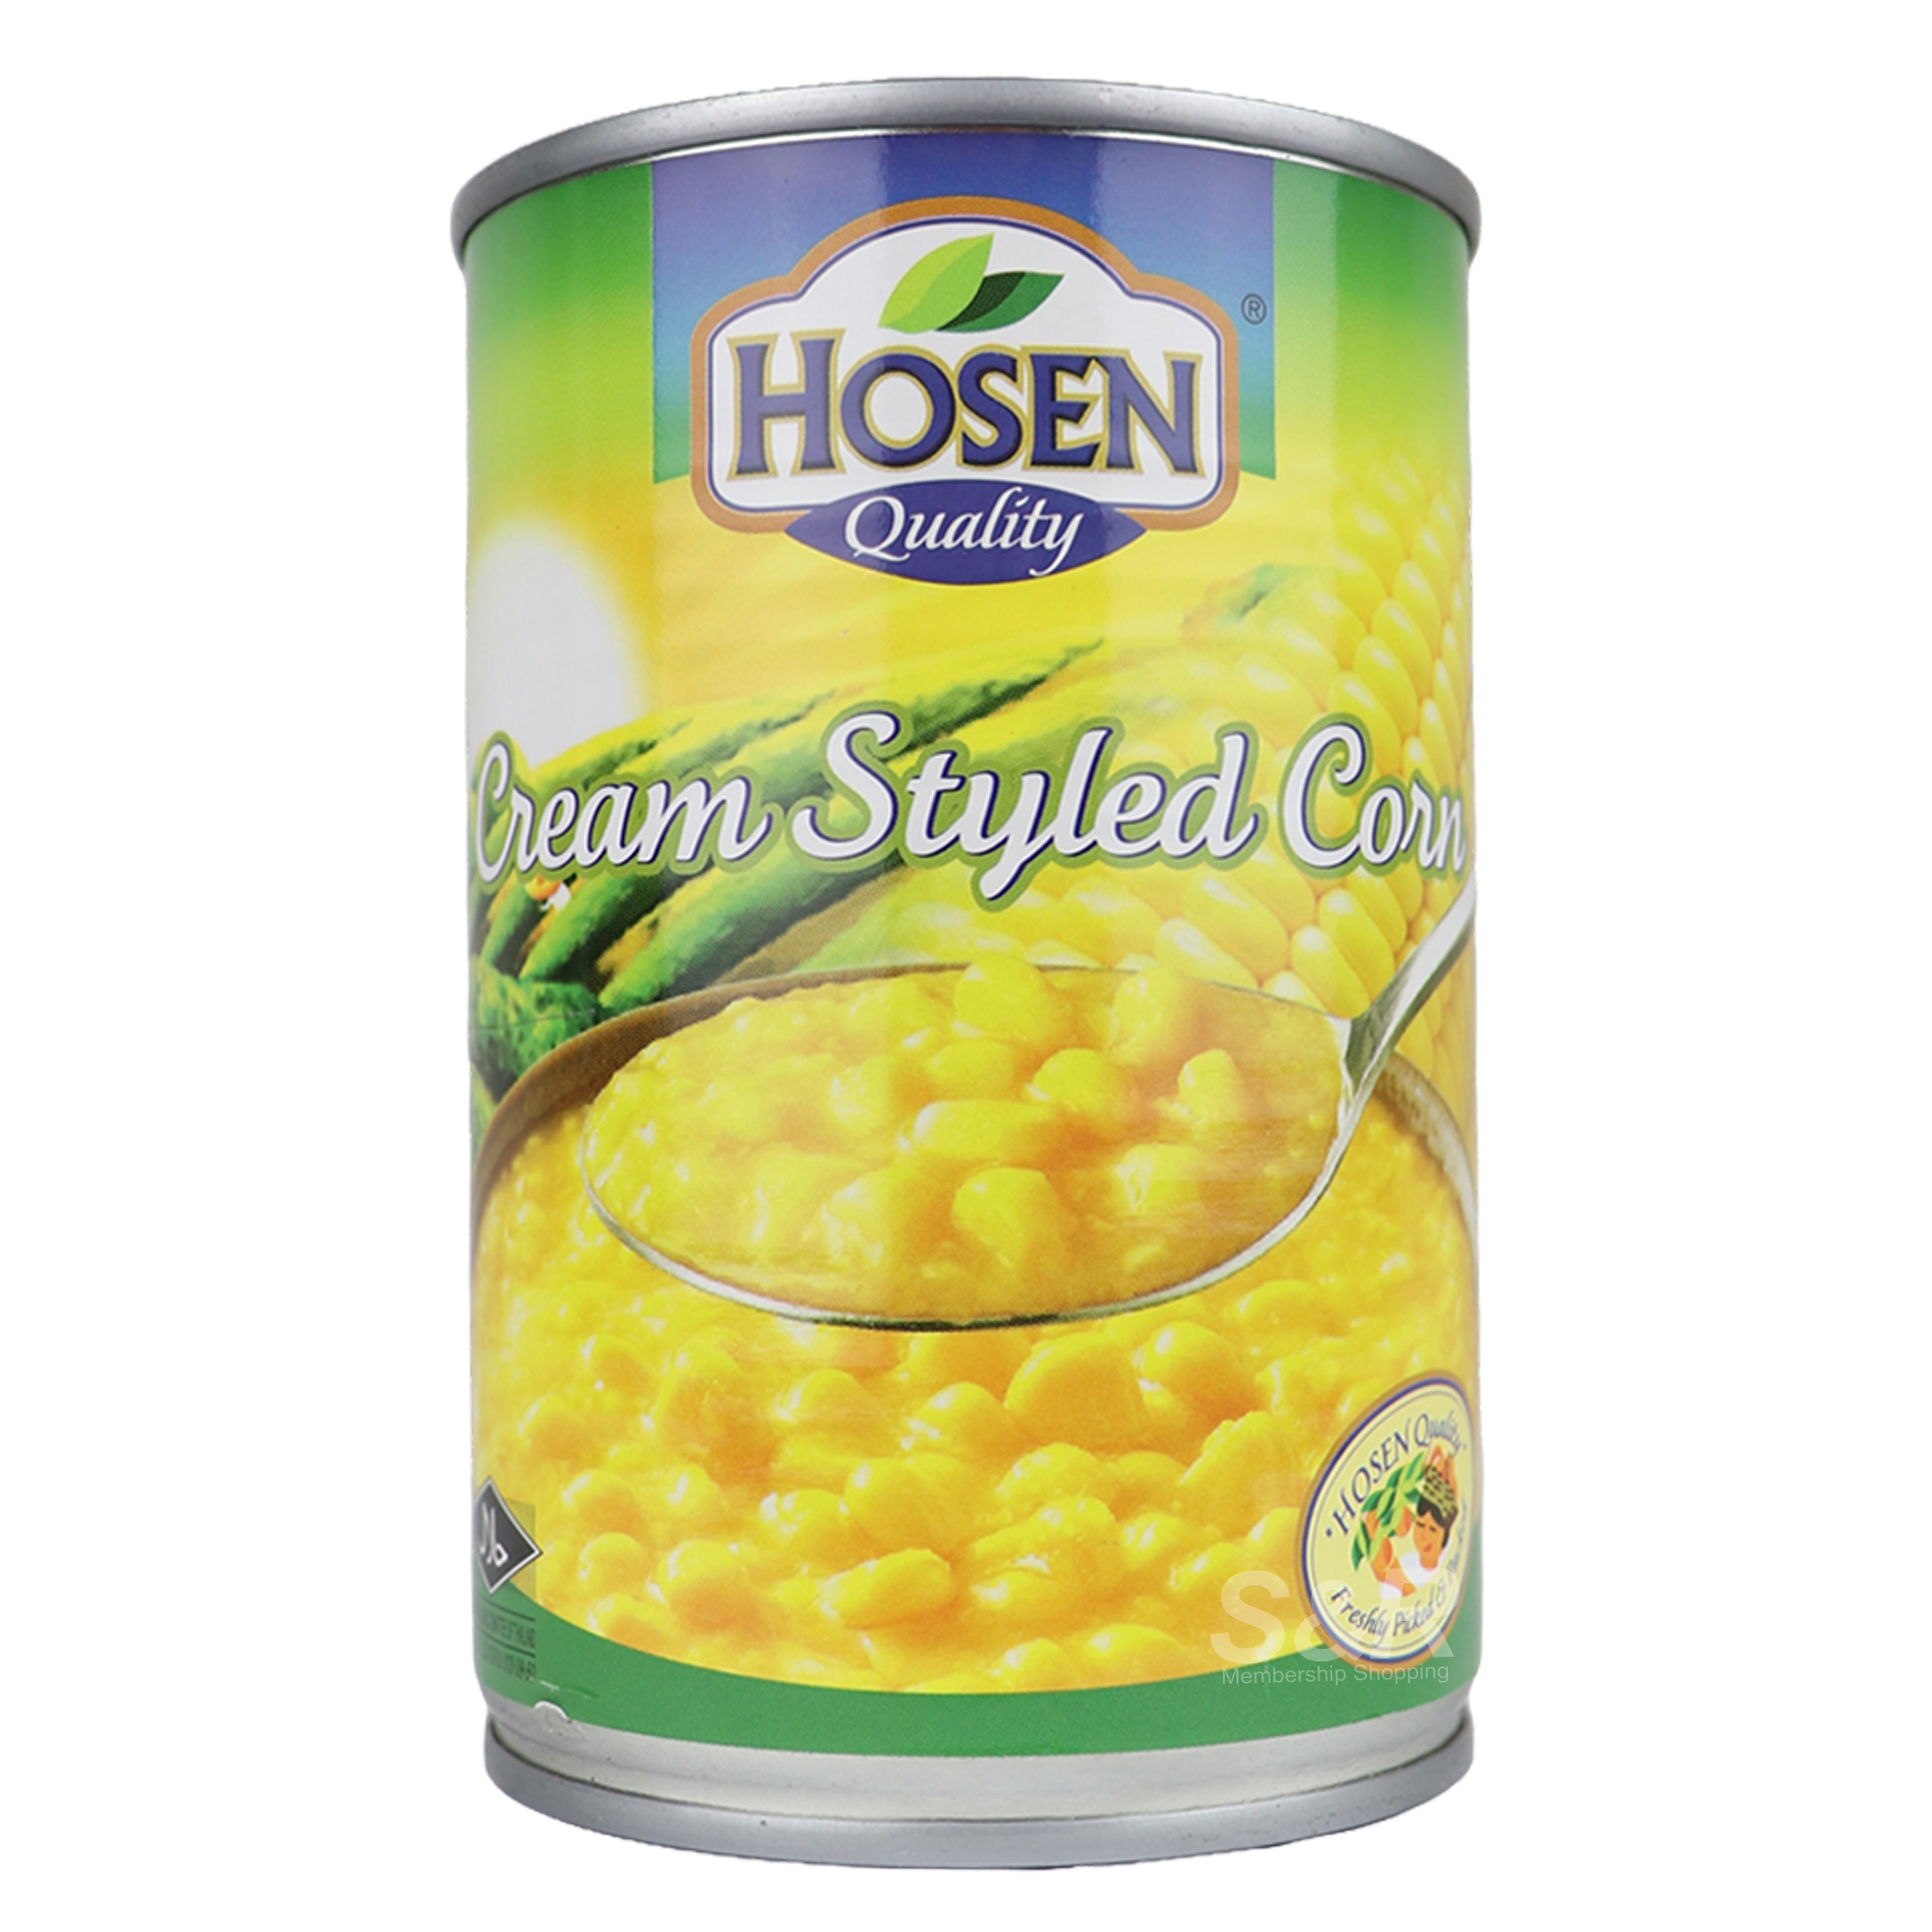 Hosen Quality Cream Styled Corn 425g